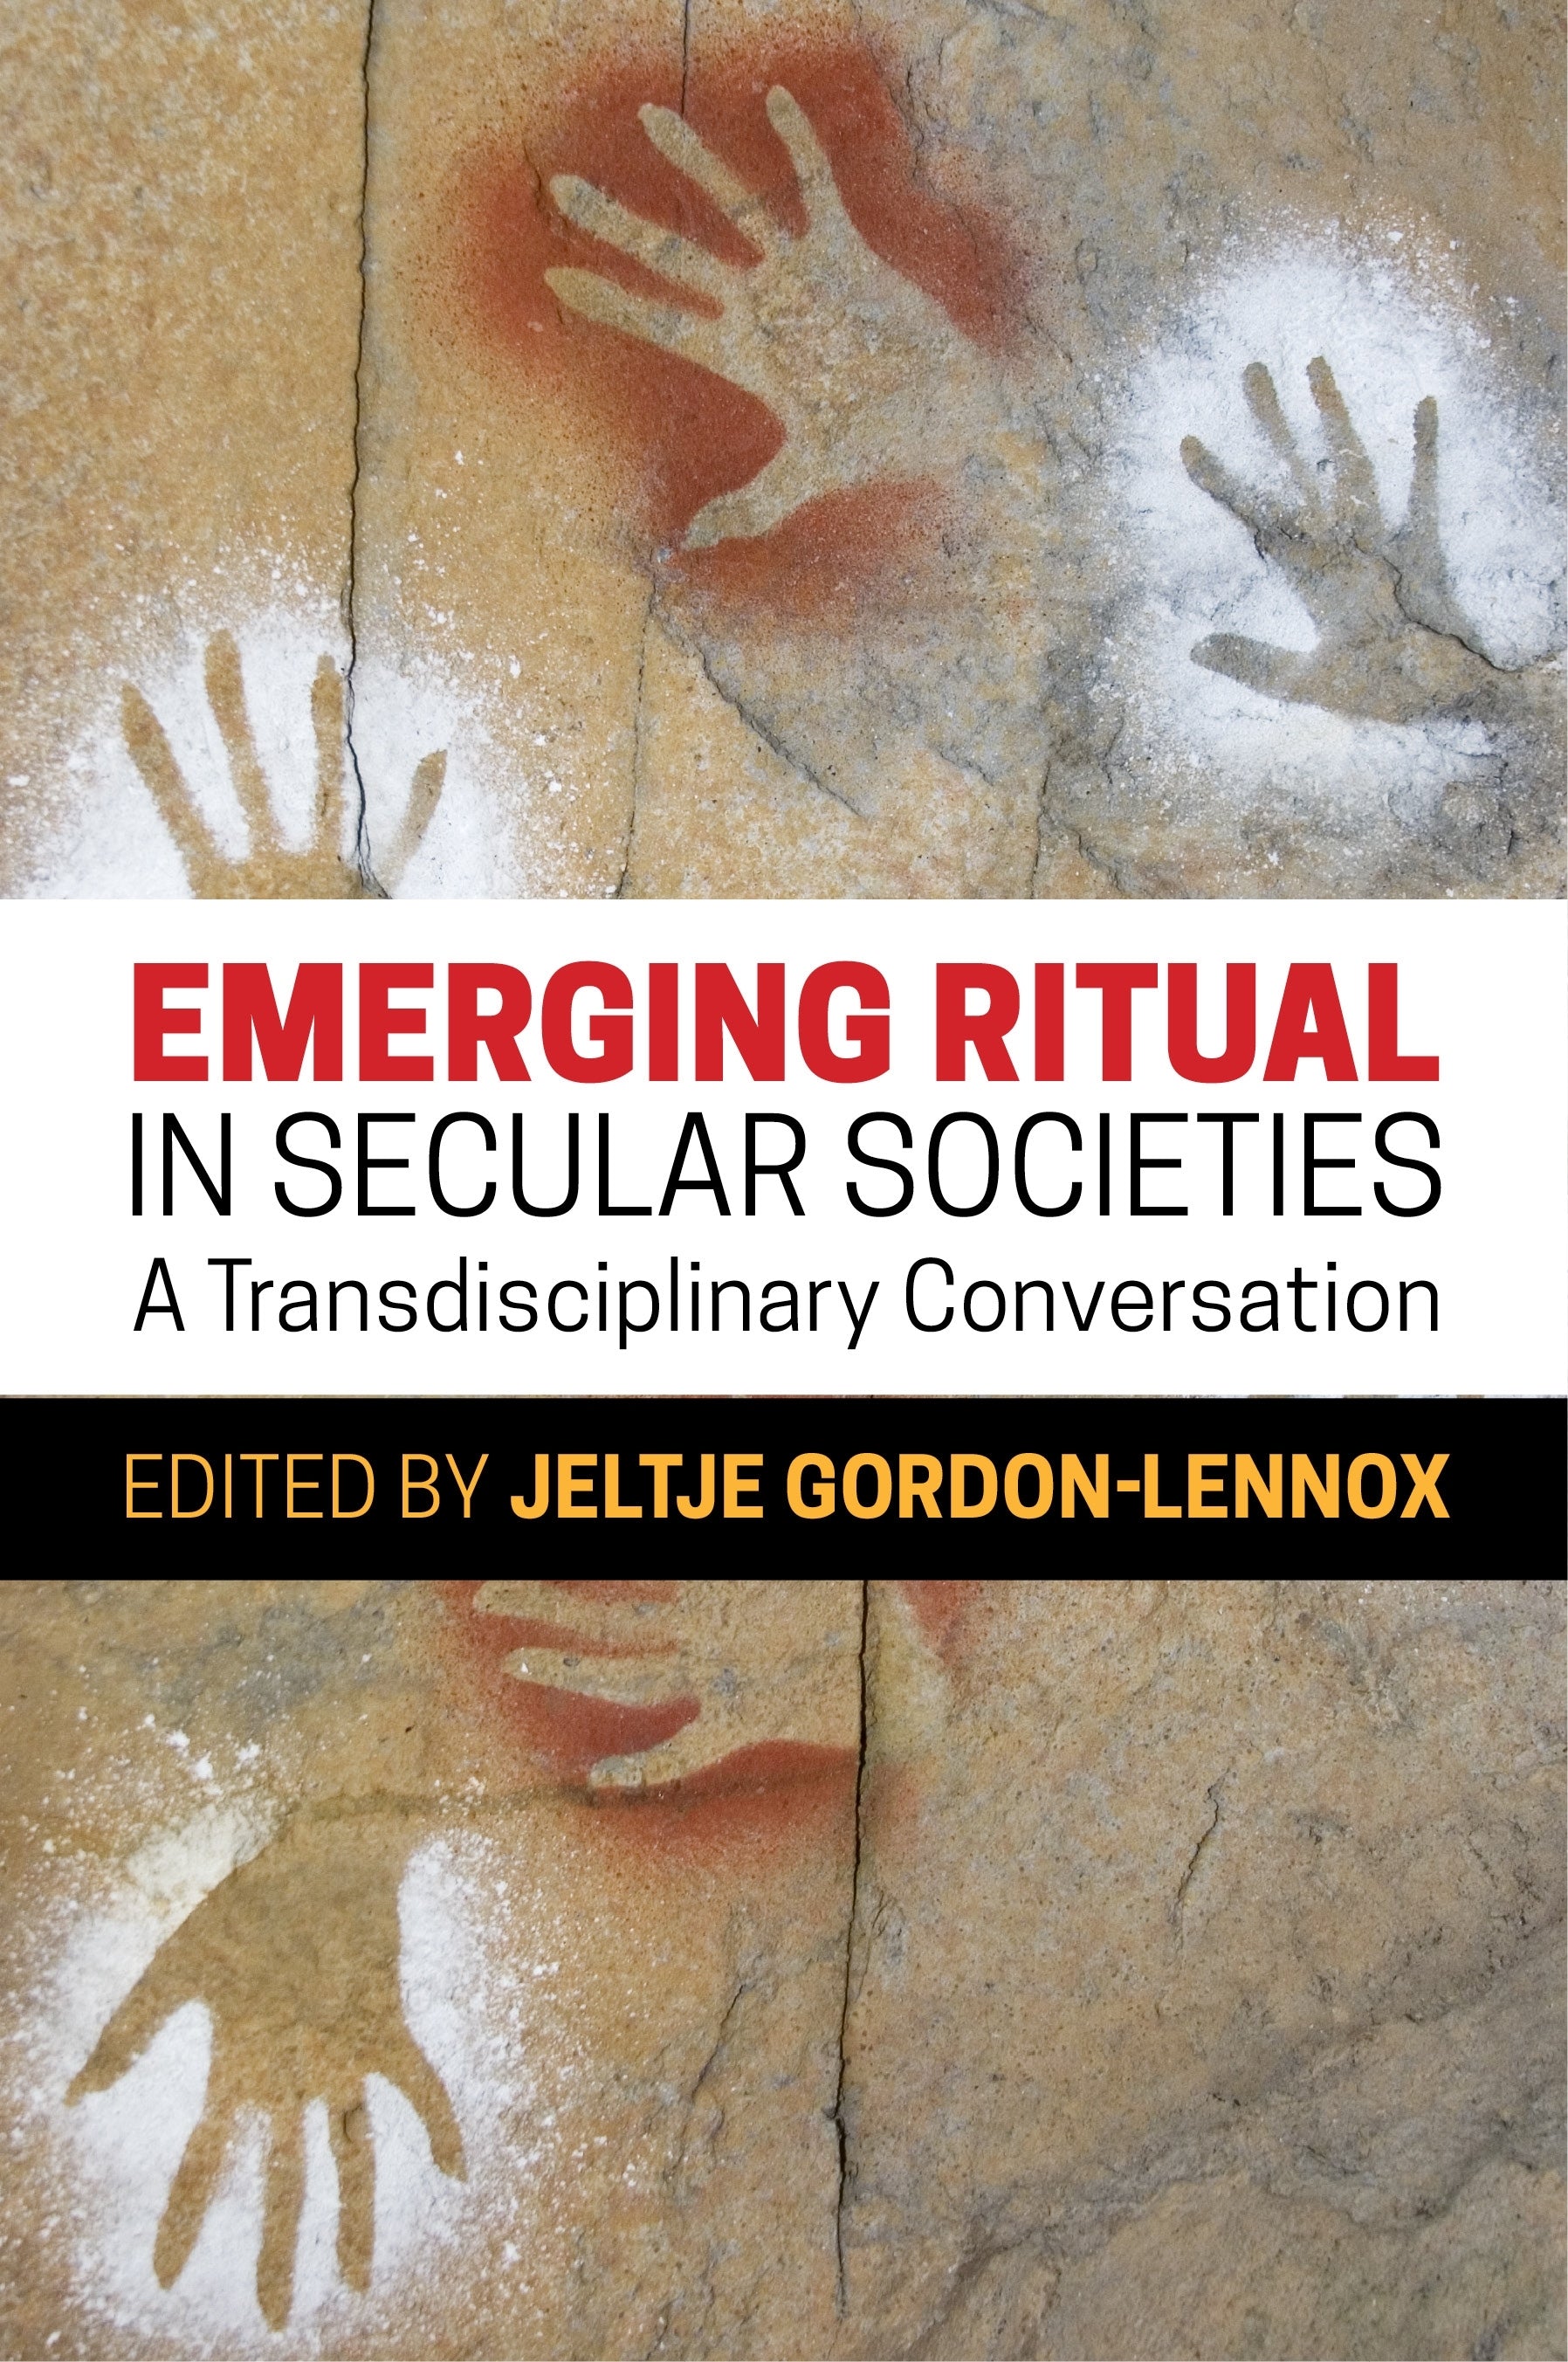 Emerging Ritual in Secular Societies by Jeltje Gordon-Lennox